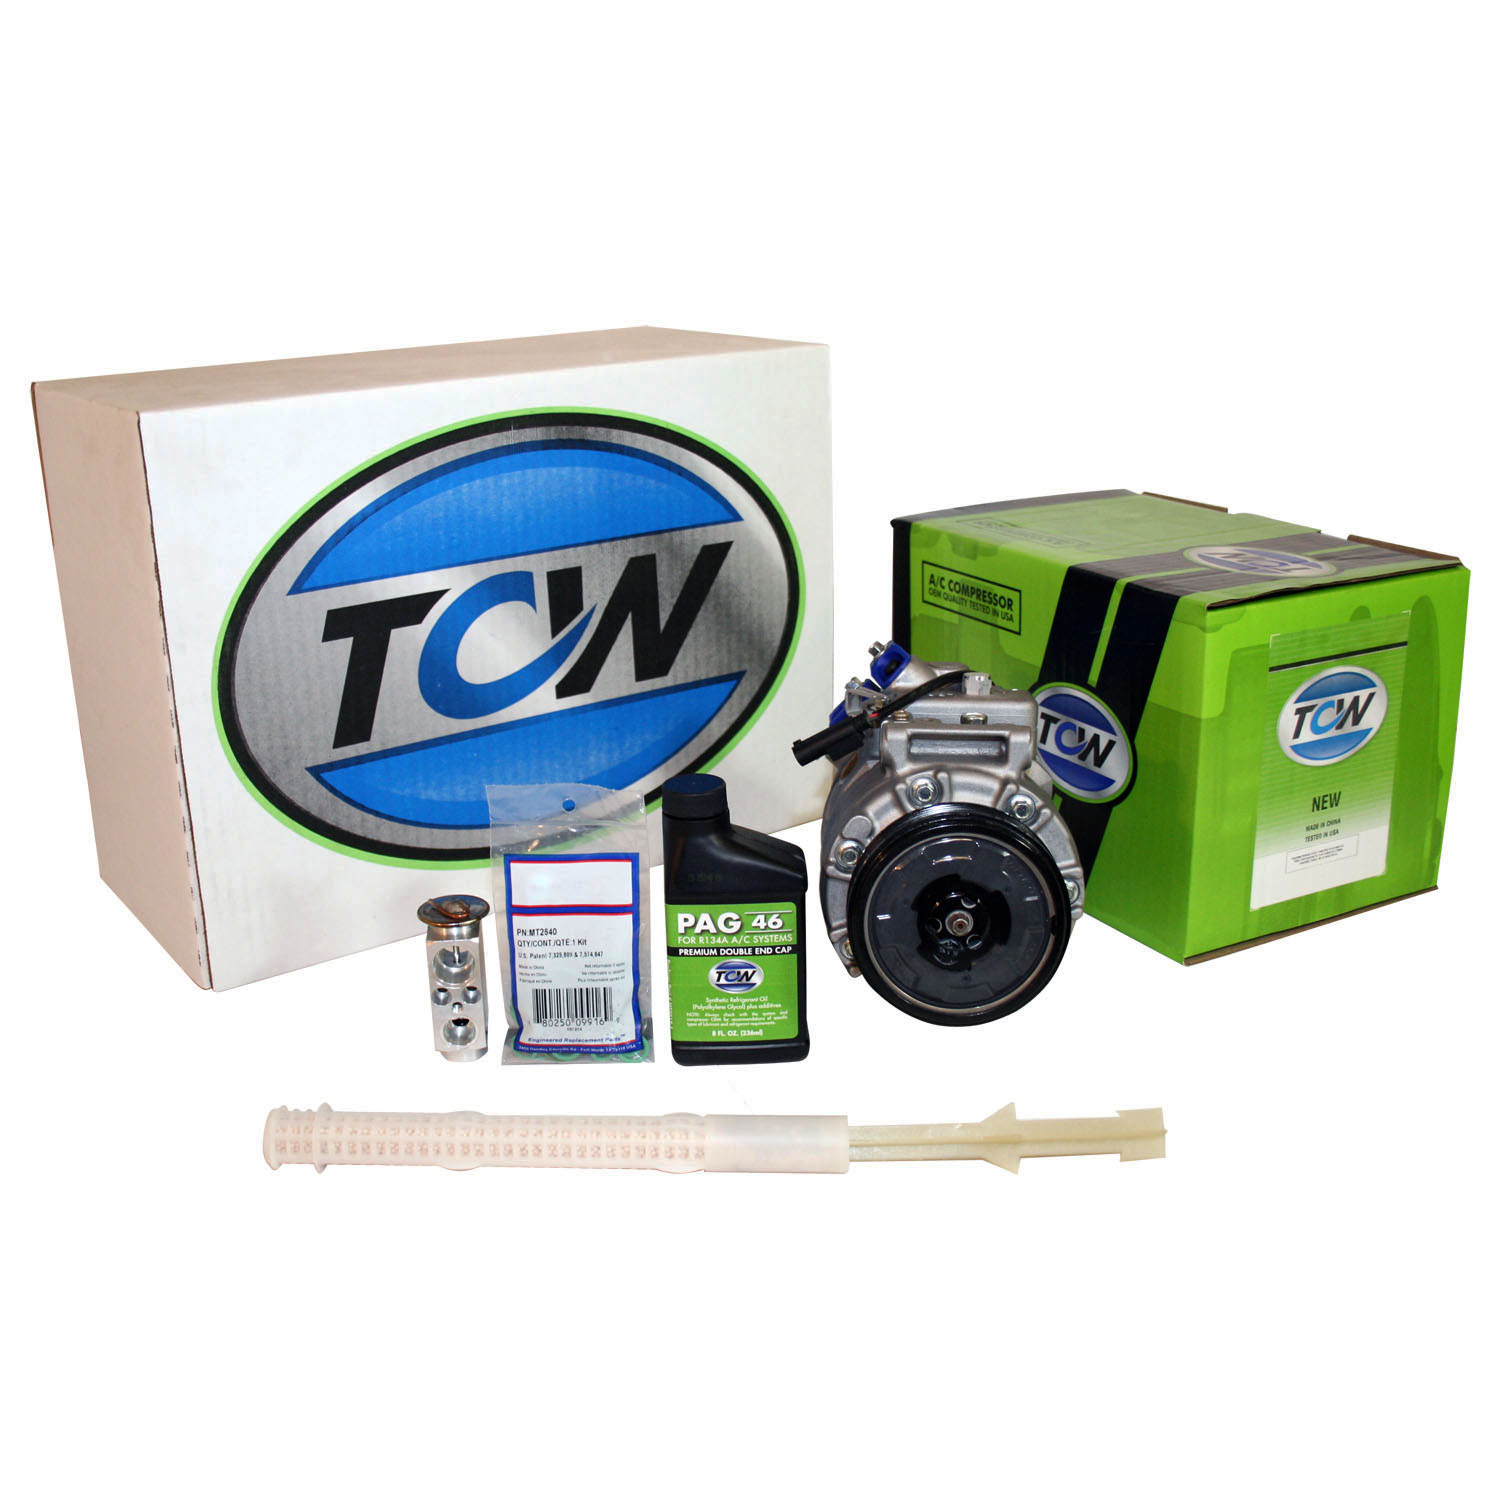 TCW Vehicle A/C Kit K1000432N New Product Image field_60b6a13a6e67c